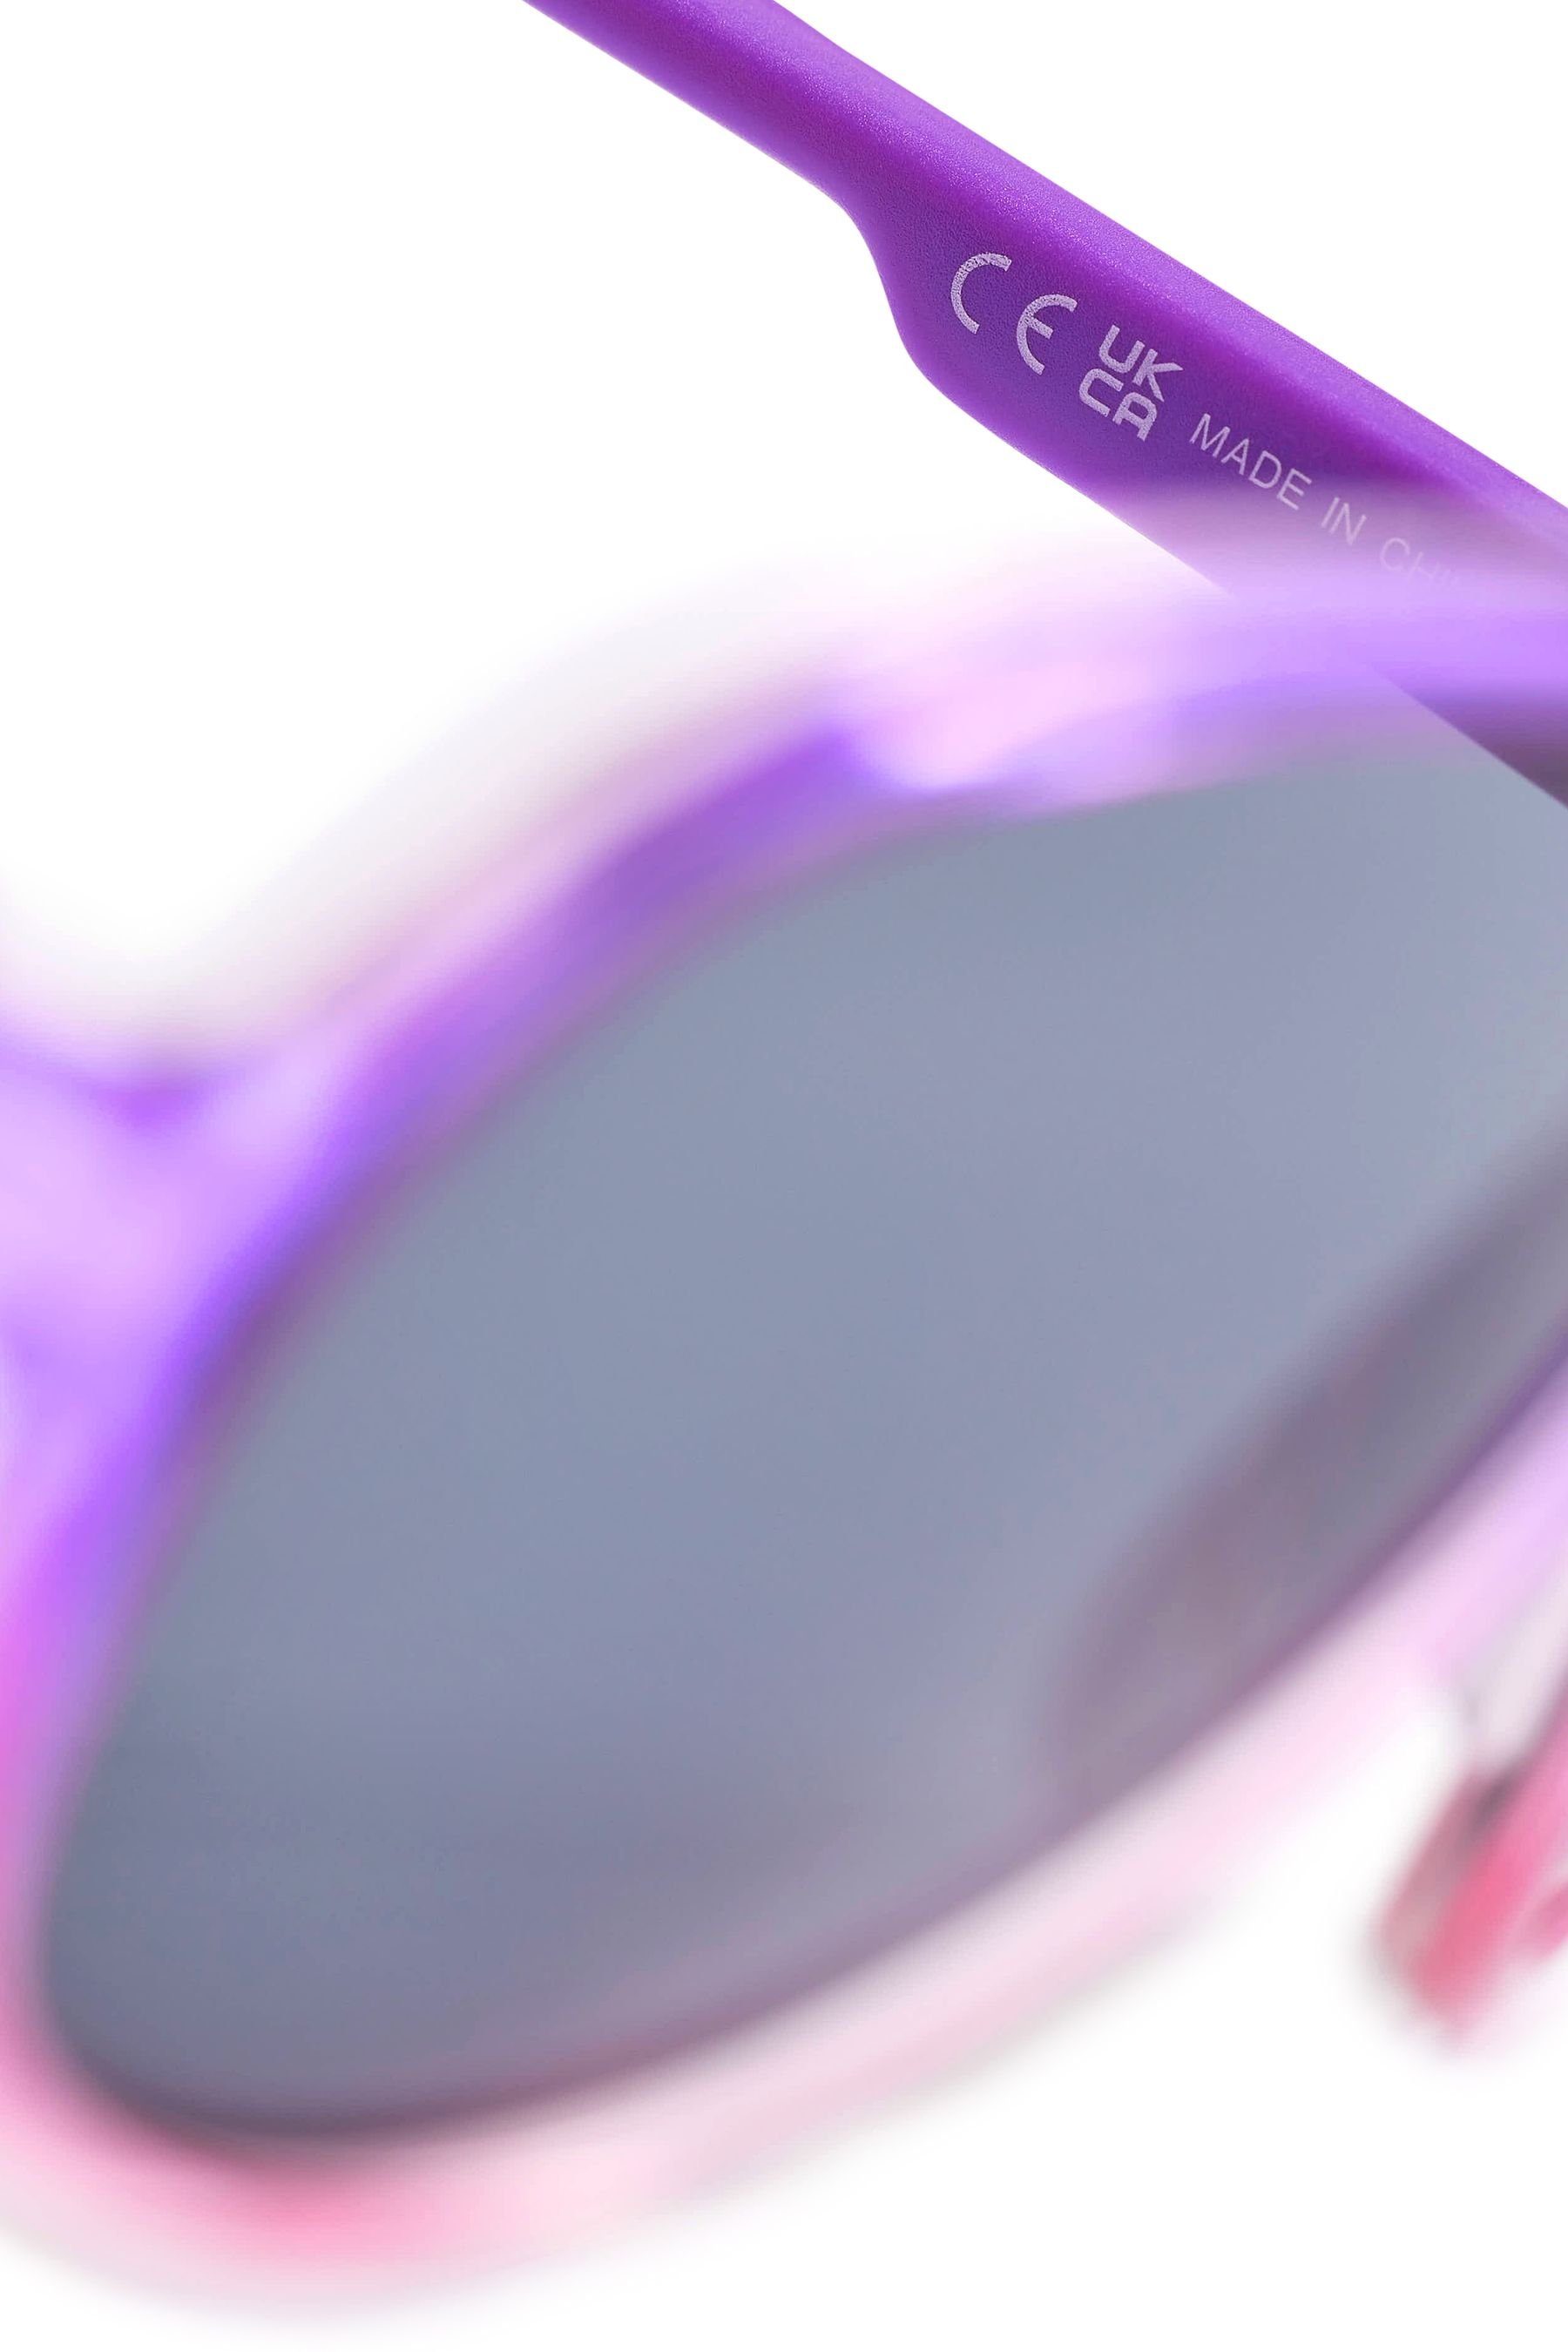 (1-St) Next Kunststoff Sonnenbrille Pilotensonnenbrille aus Lilac Purple